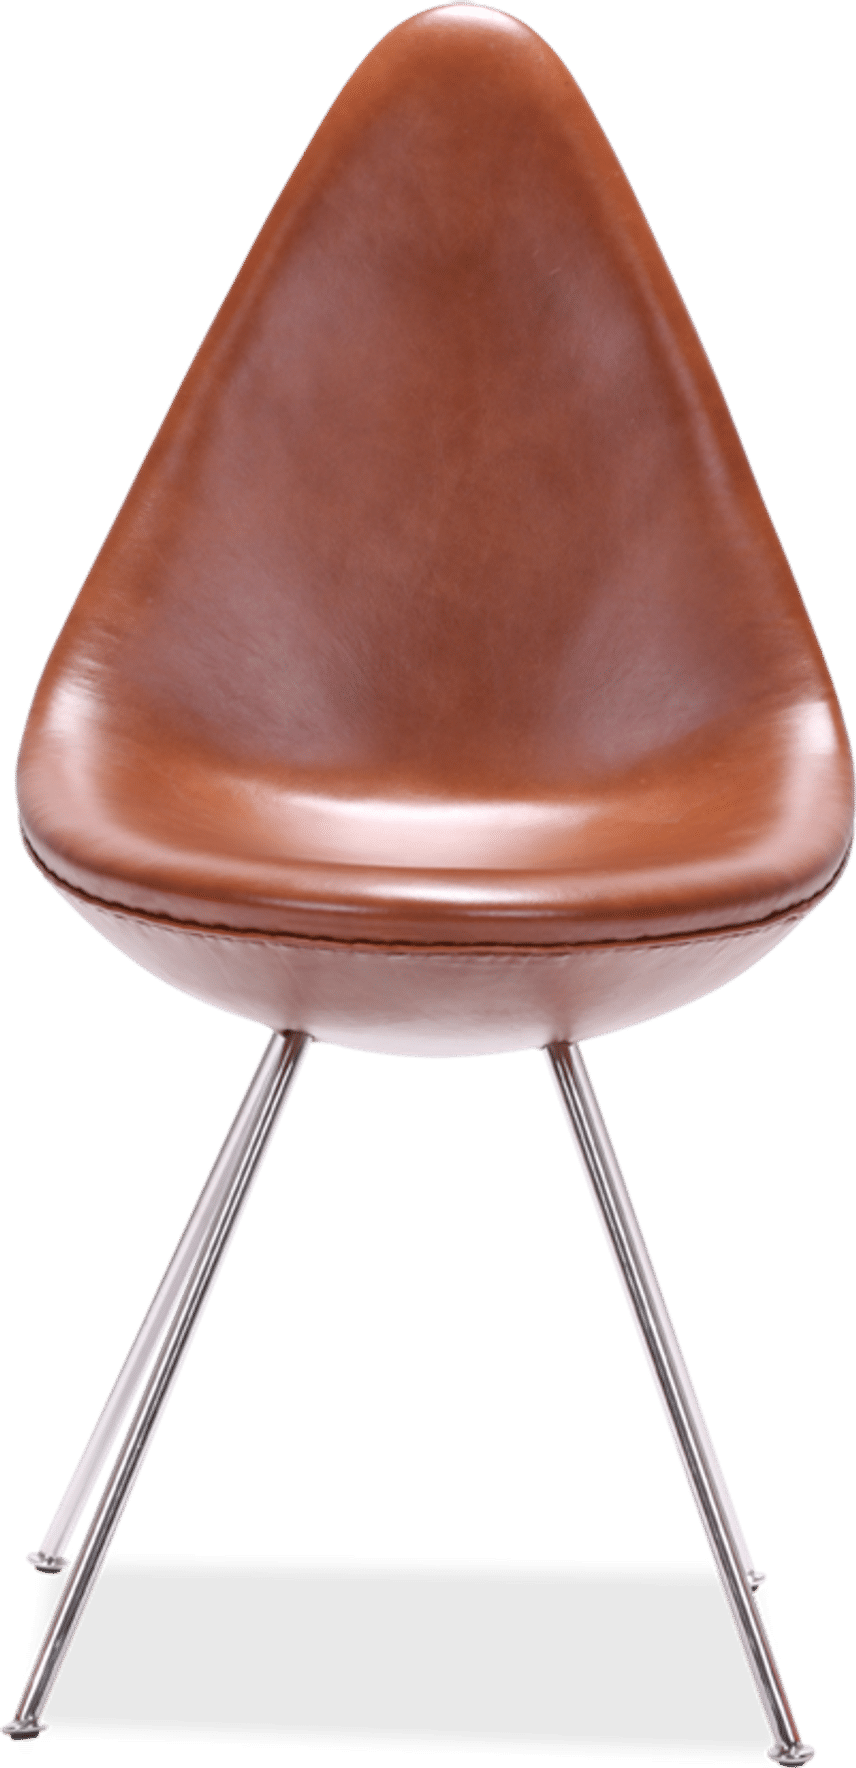 Drop Chair Premium Leather/Dark Tan image.